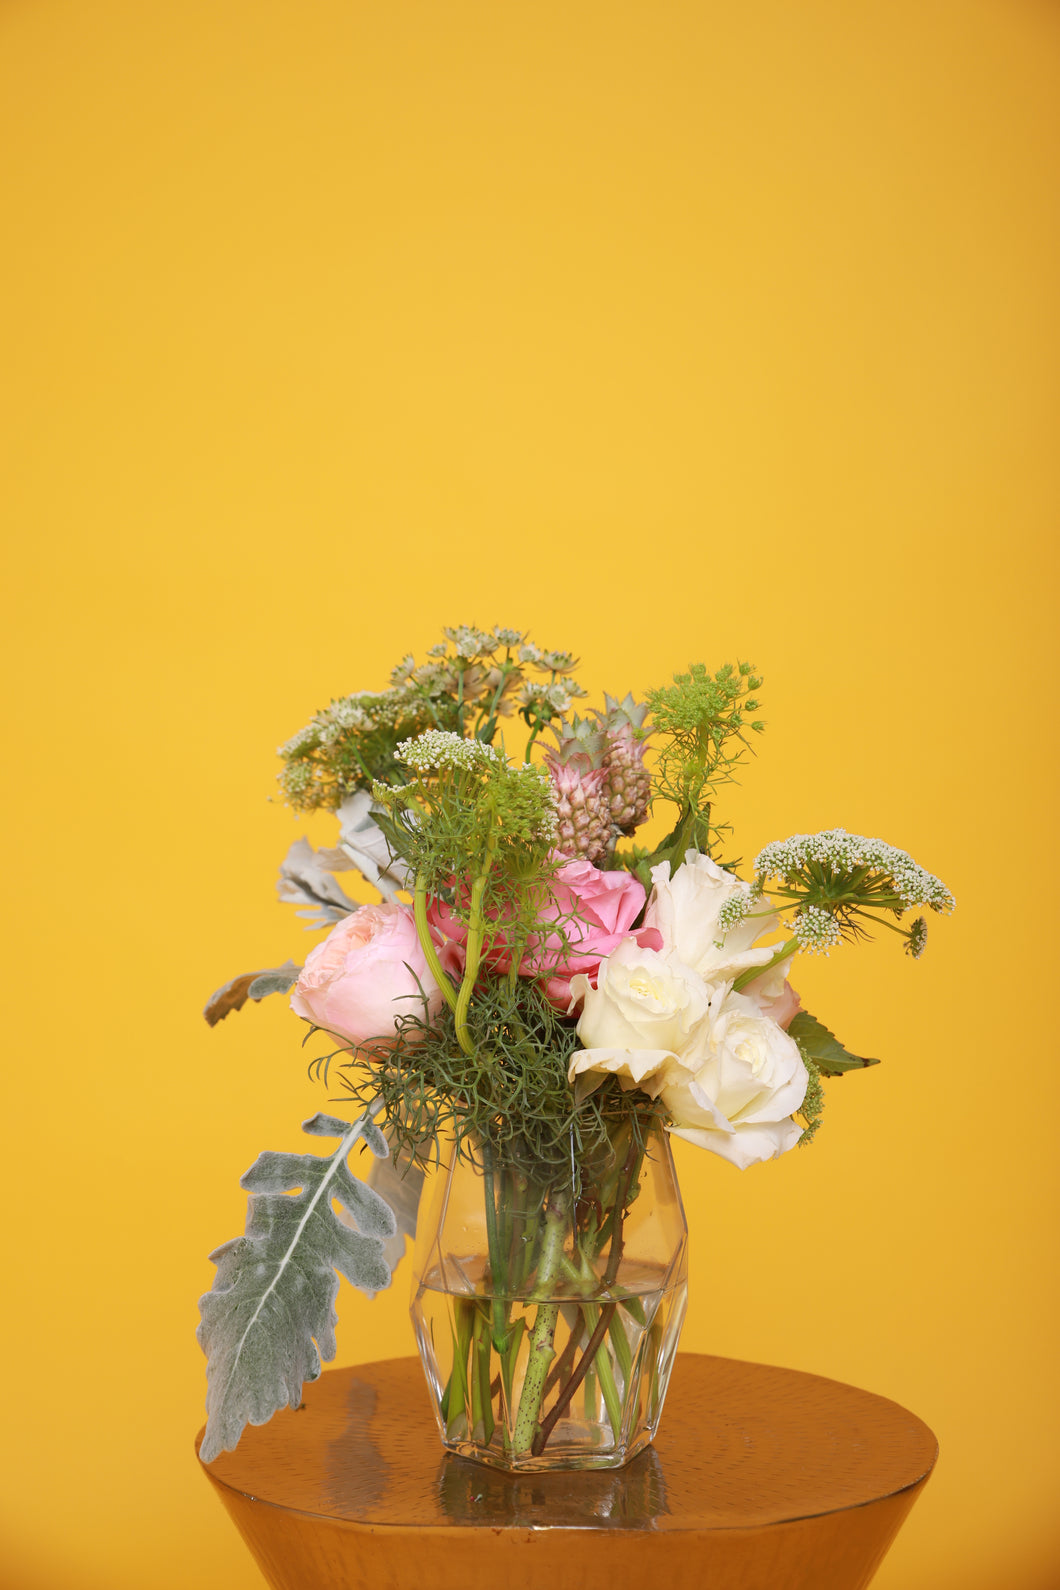 Clear Geometric Vase with whimsical greenery and seasonal flowers